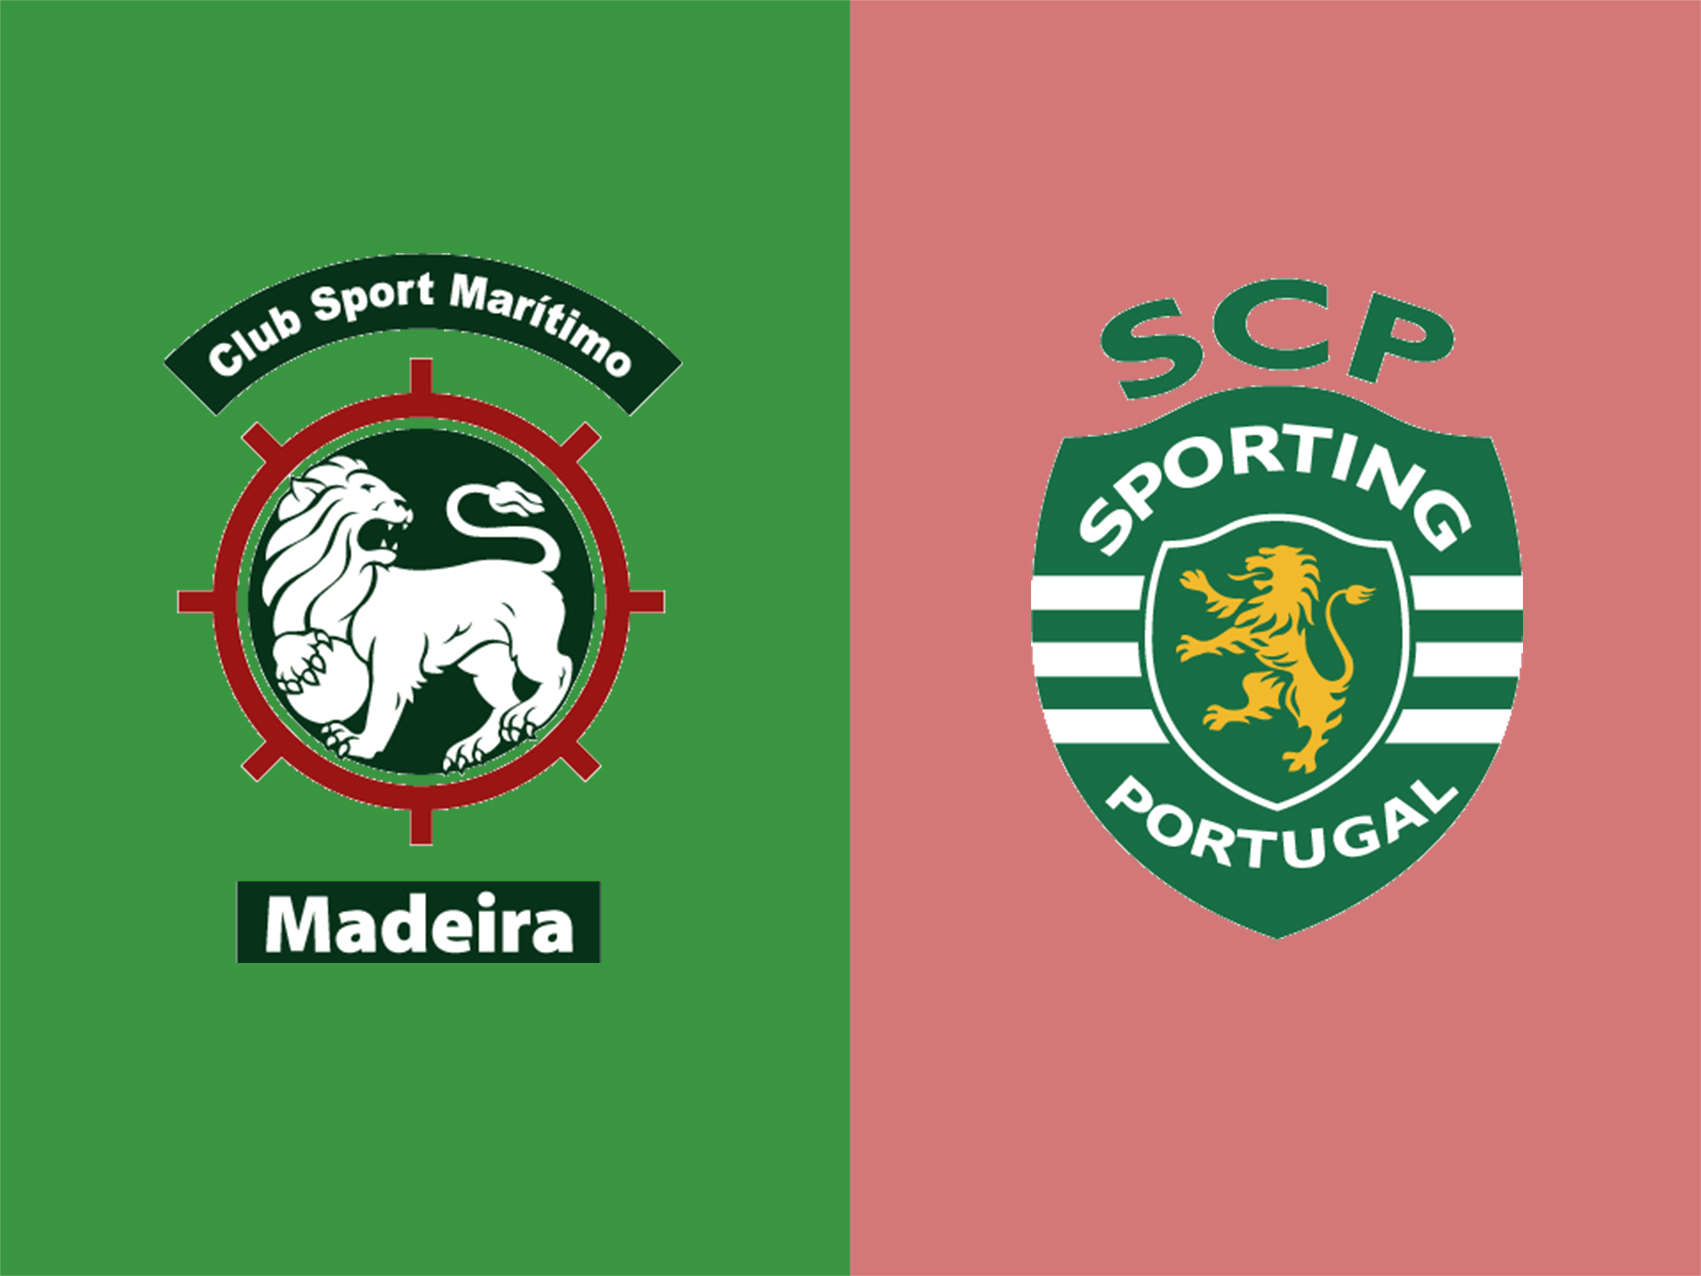 soi-keo-ca-cuoc-bong-da-ngay-2-8- Maritimo-vs-Sporting Lisbon-tim-kiem-chien-thang-b9 1